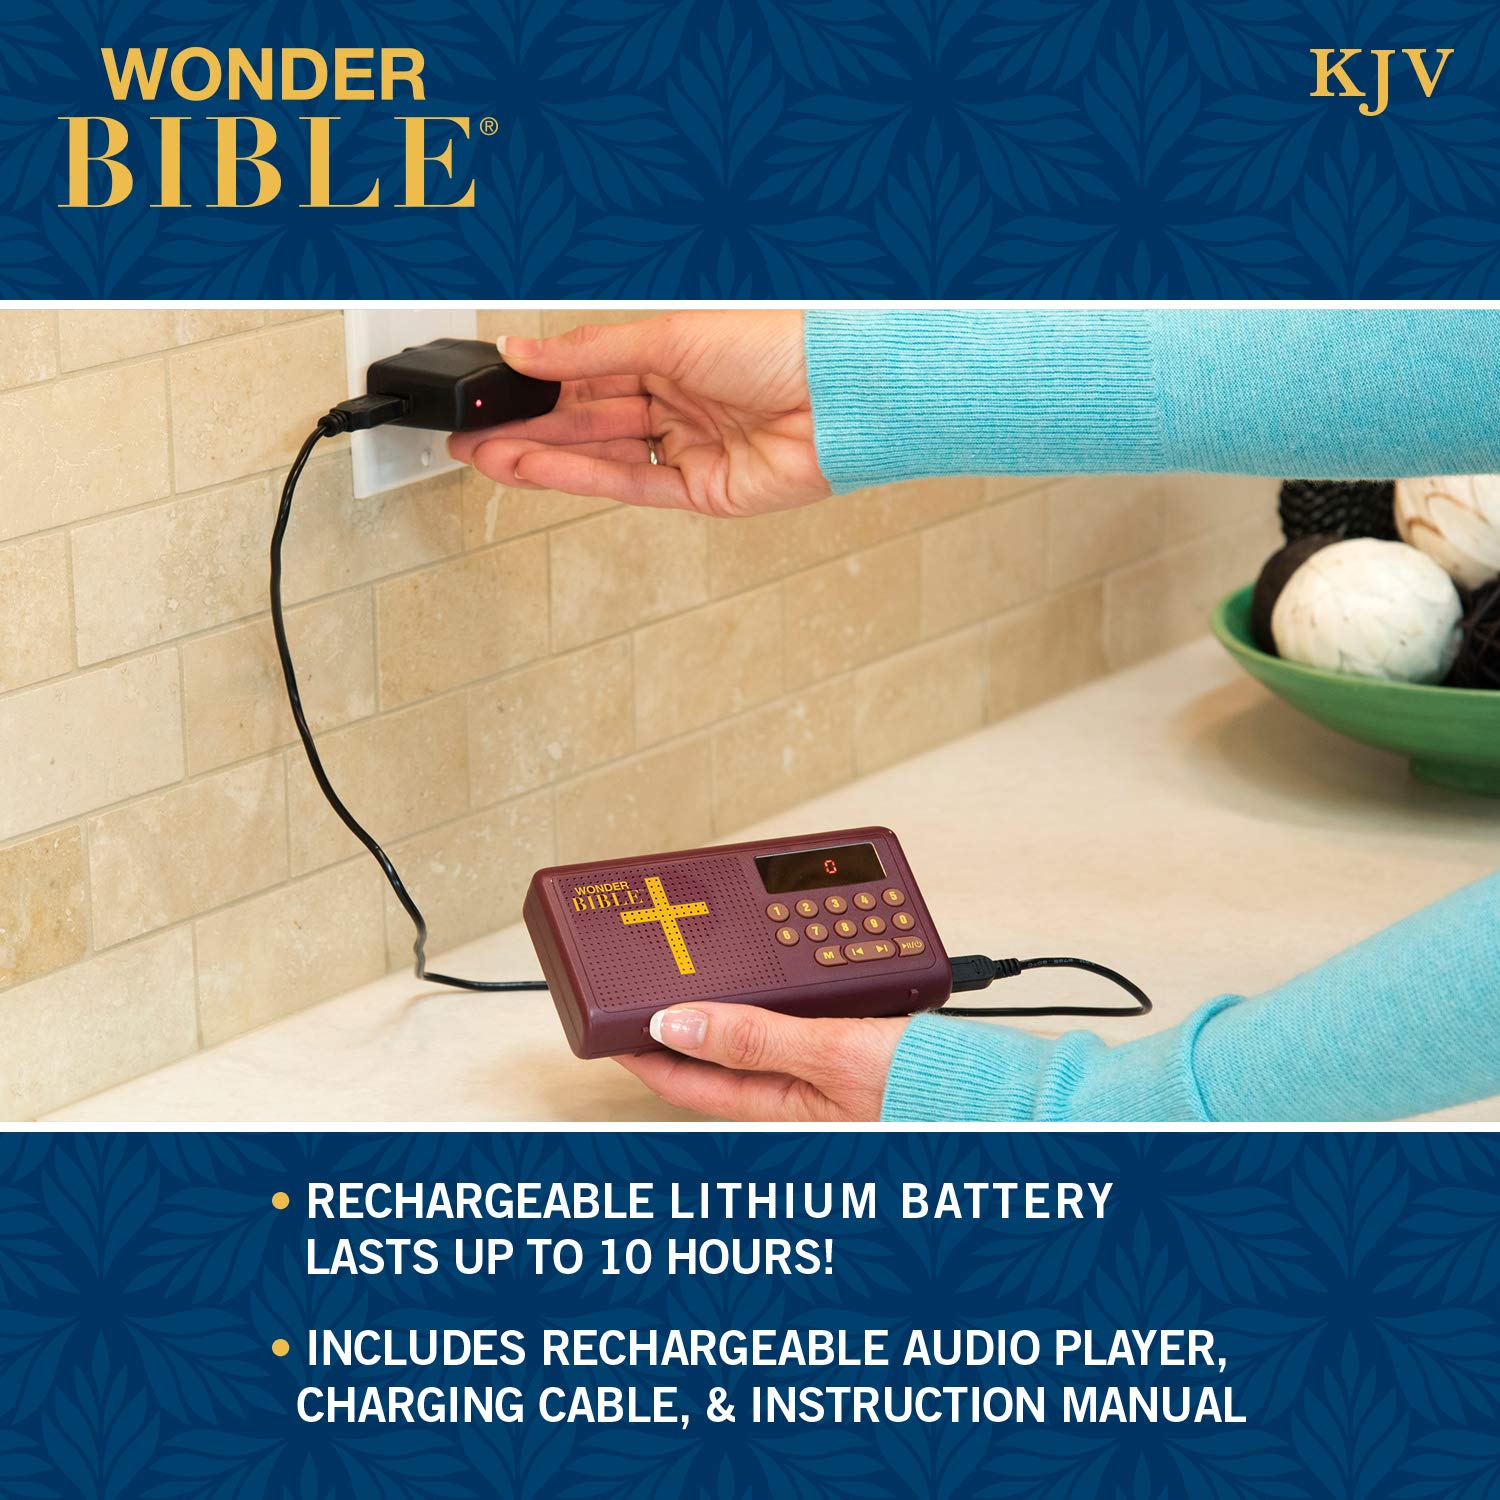 Wonder Bible KJV- The Talking Audio Bible Player (King James Version) New & Old Testament, As Seen on TV